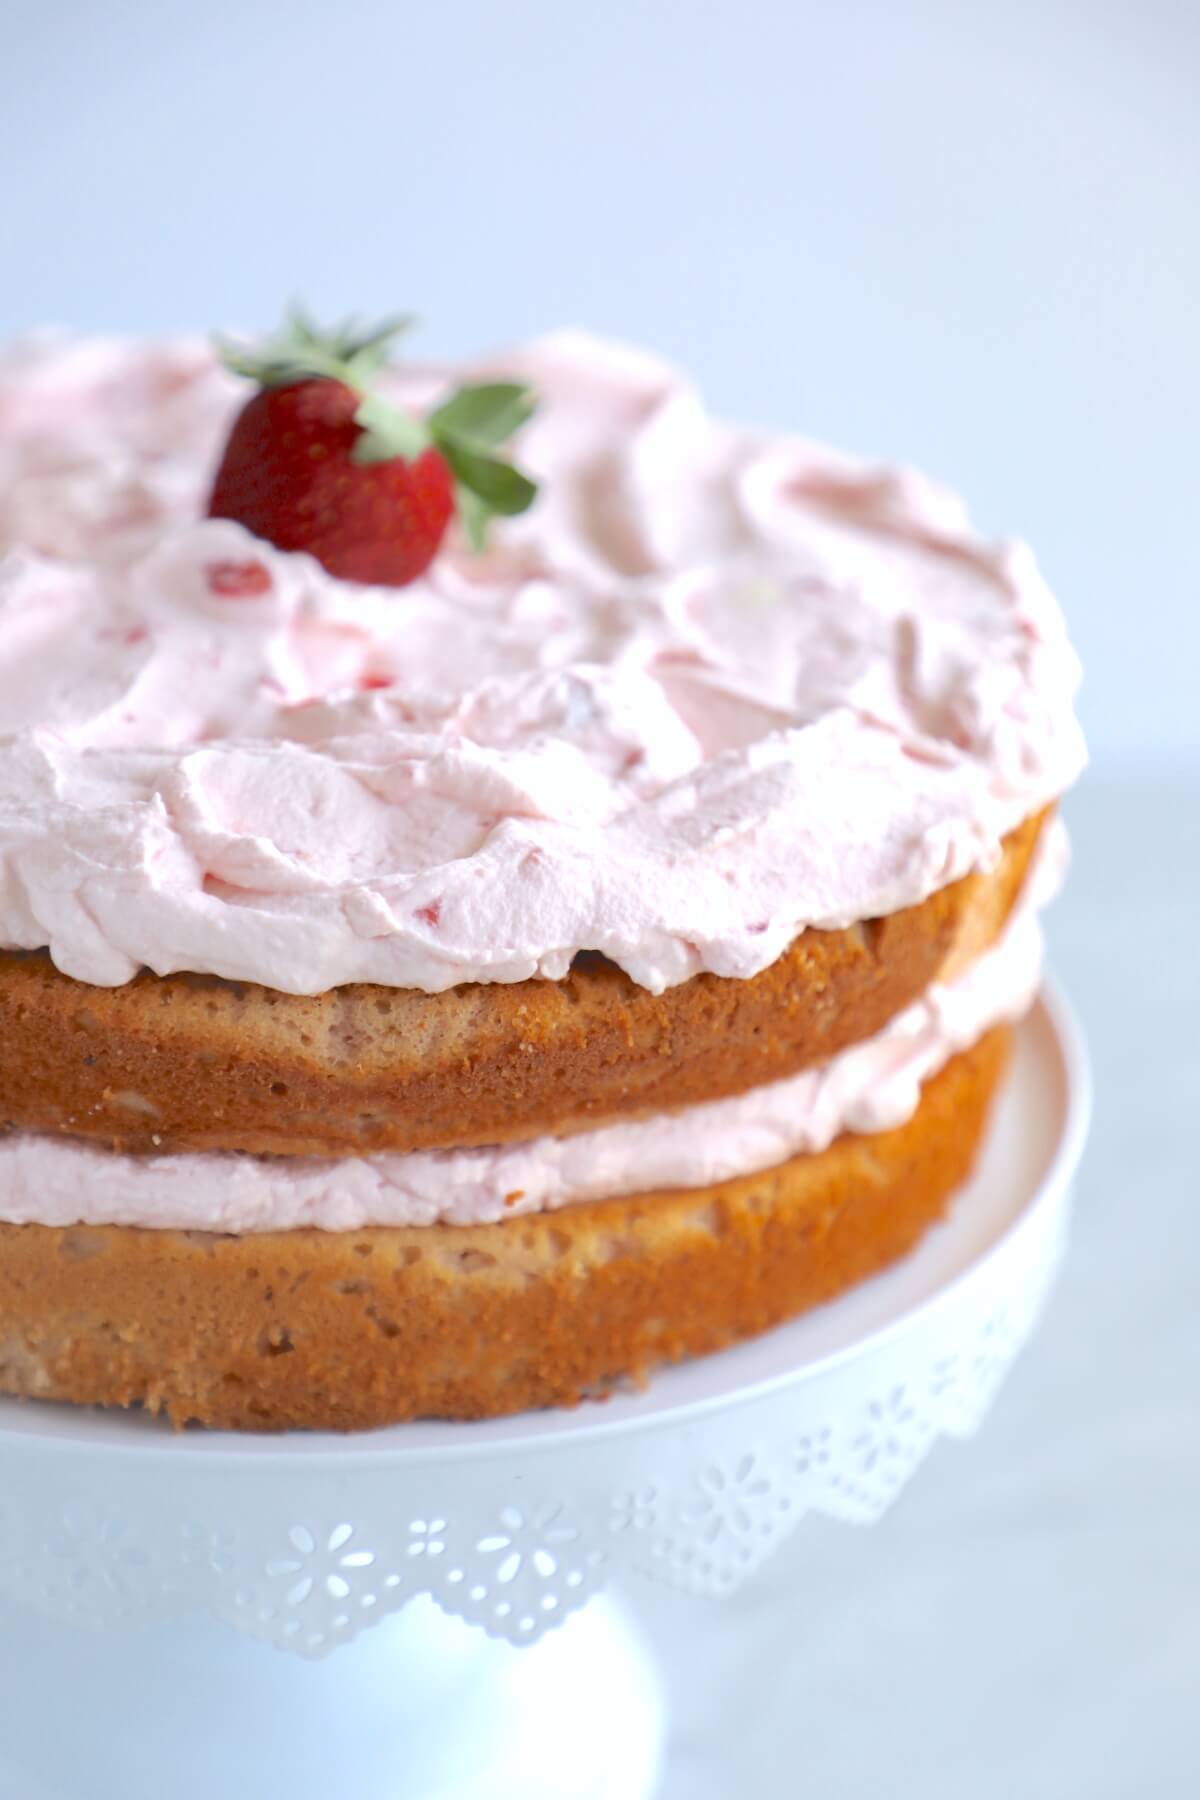 A 2 layer keto strawberry cake